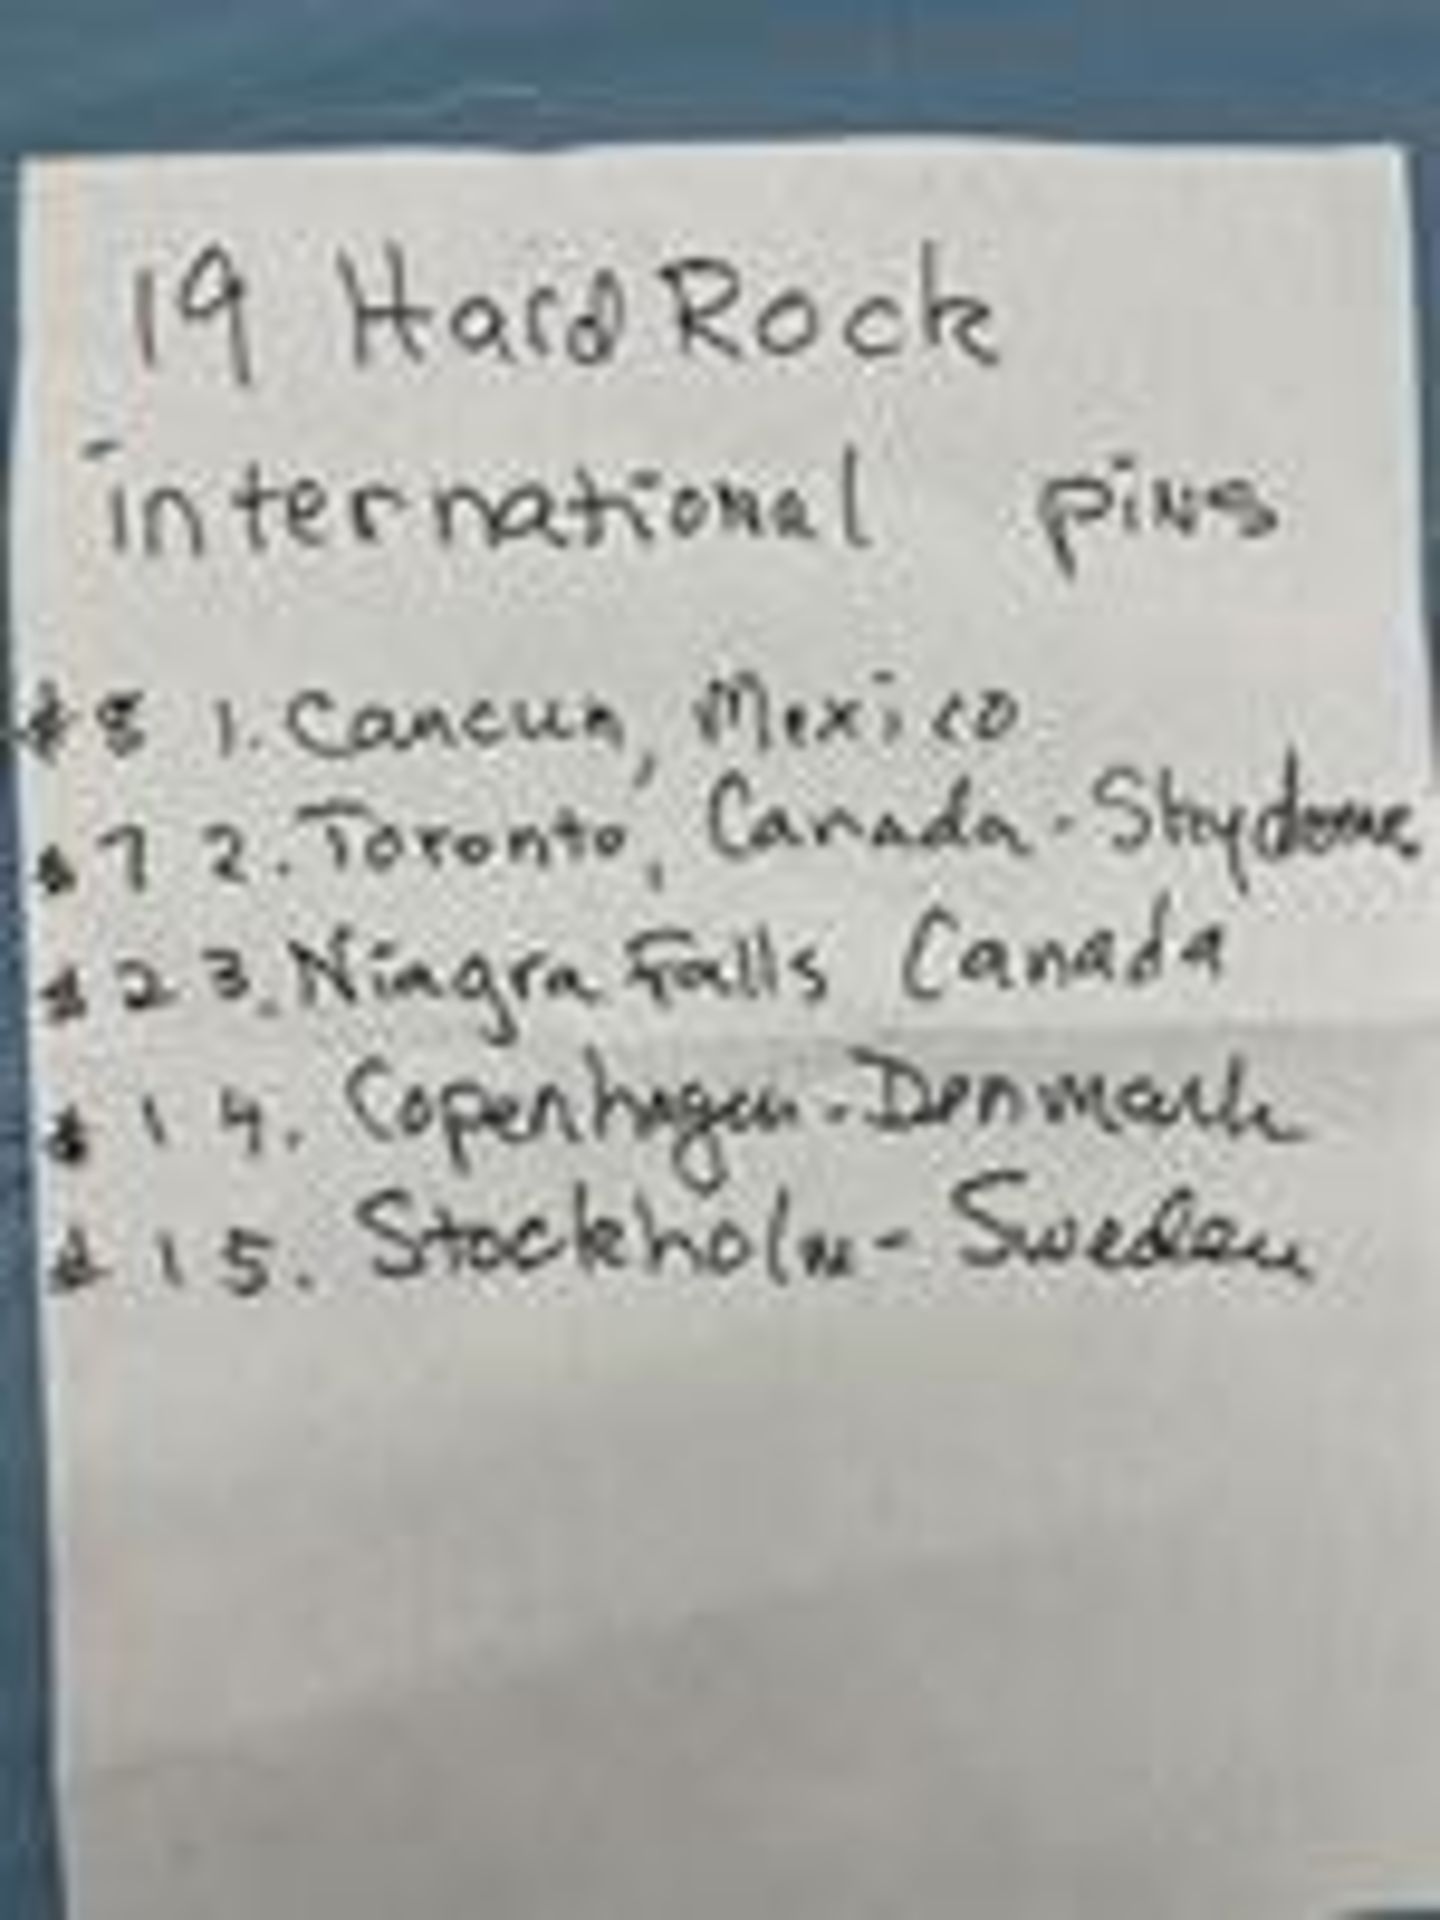 (Lot) (19) International Hard Rock Cafe Pins new Cancun Mexico , Toronto Can, Niagara falls, - Image 2 of 2